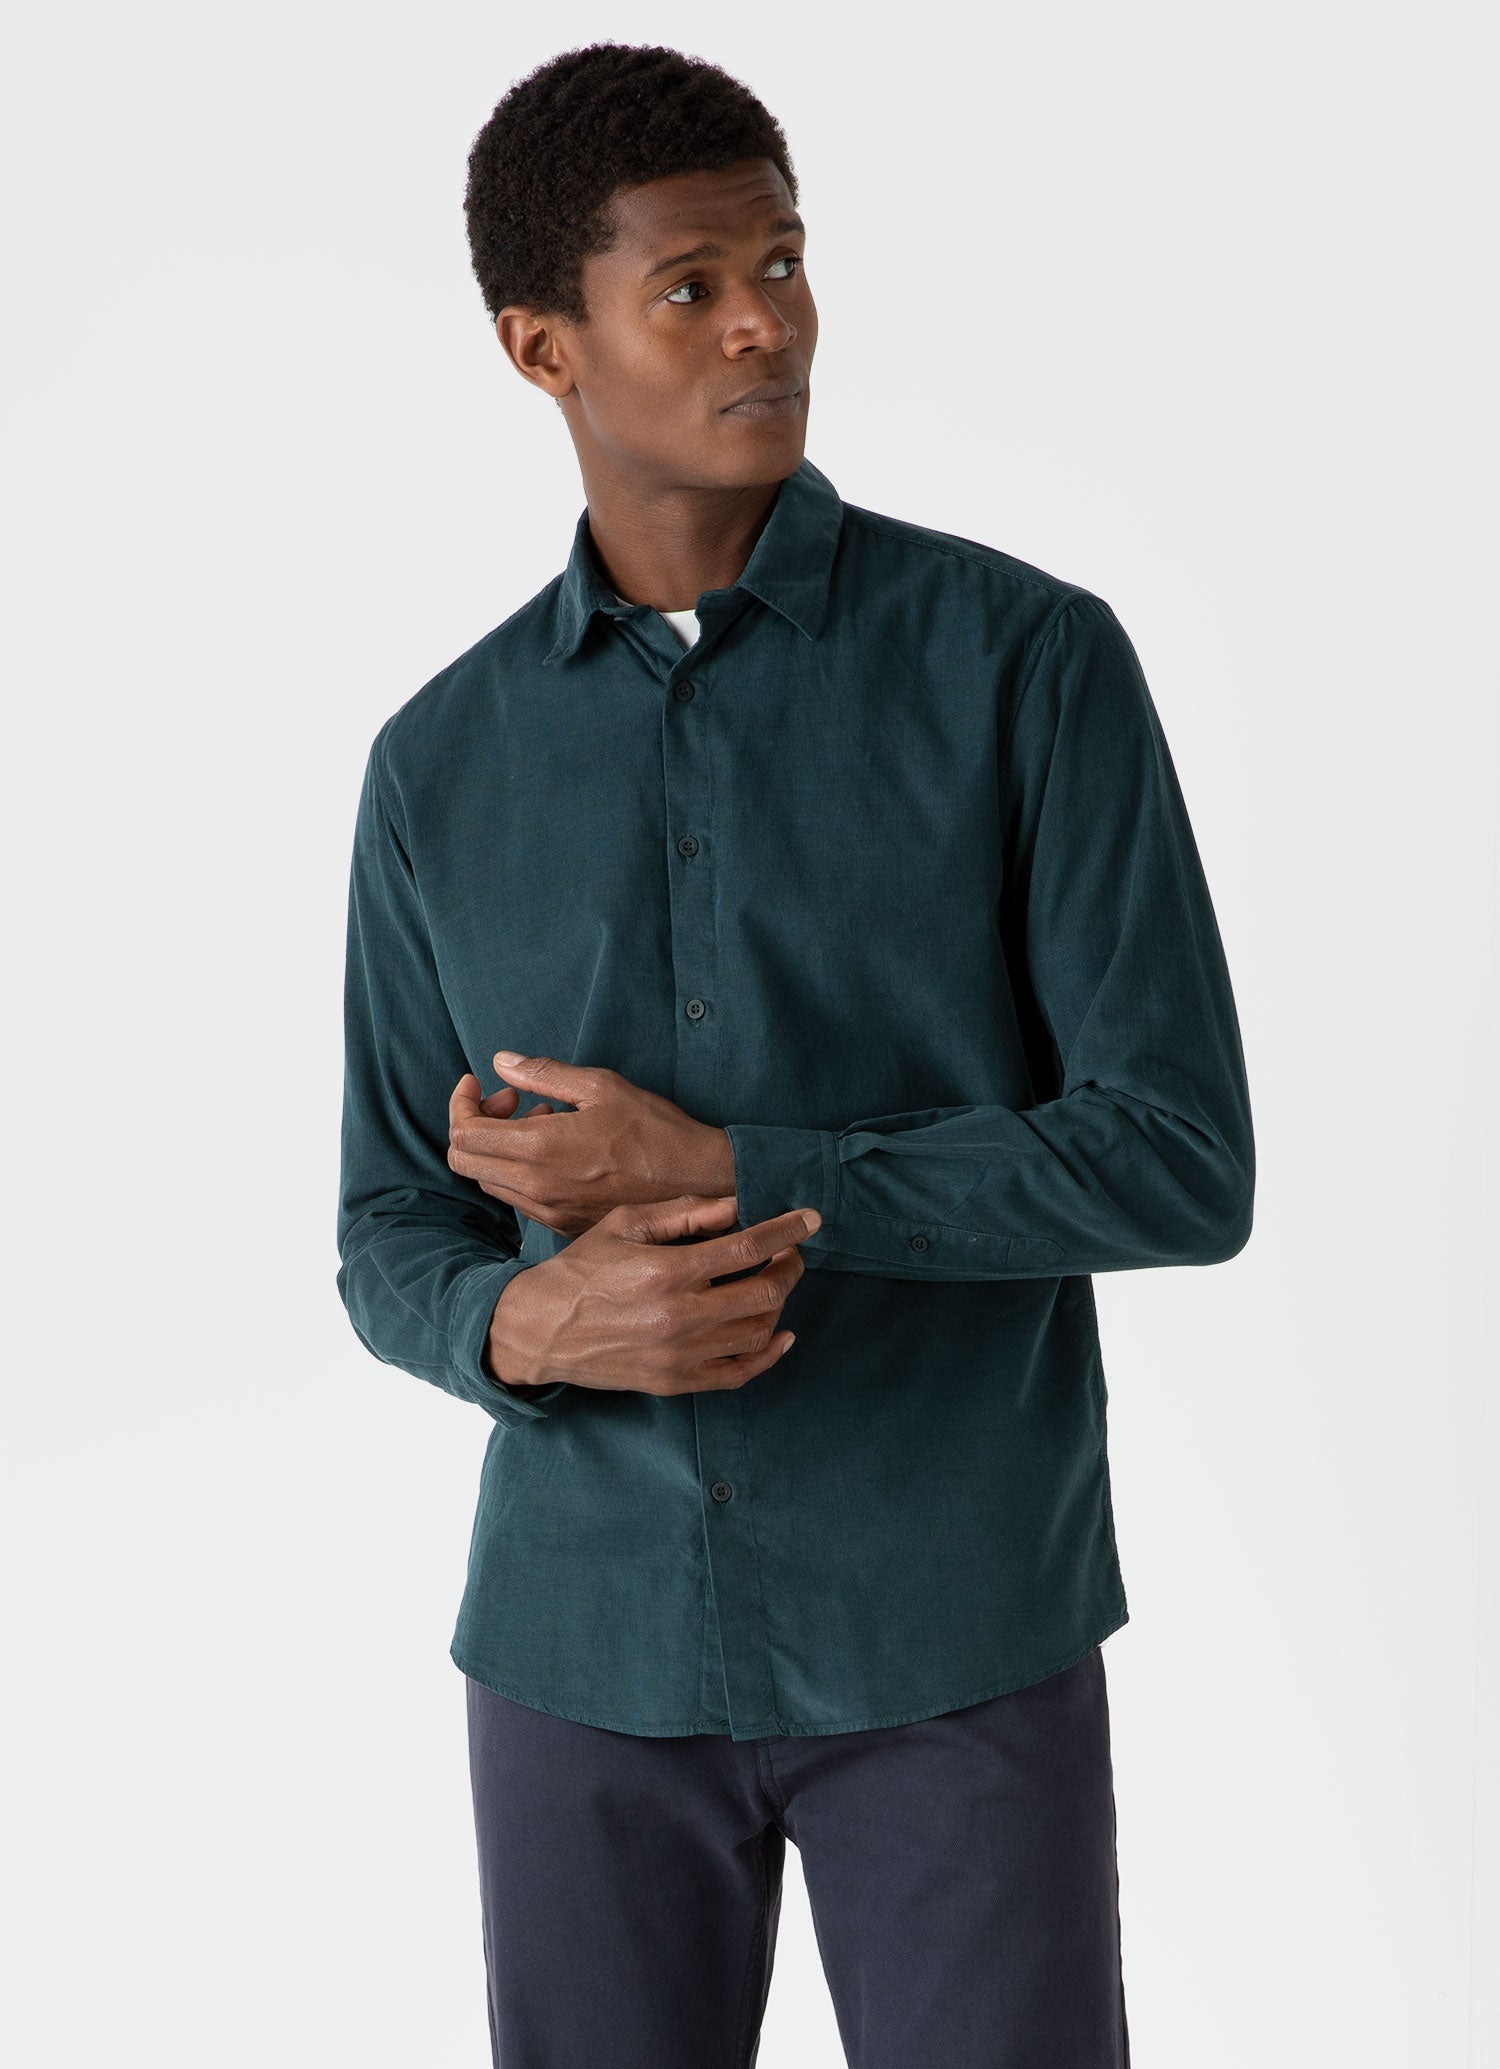 Men's Fine Cord Shirt in Peacock